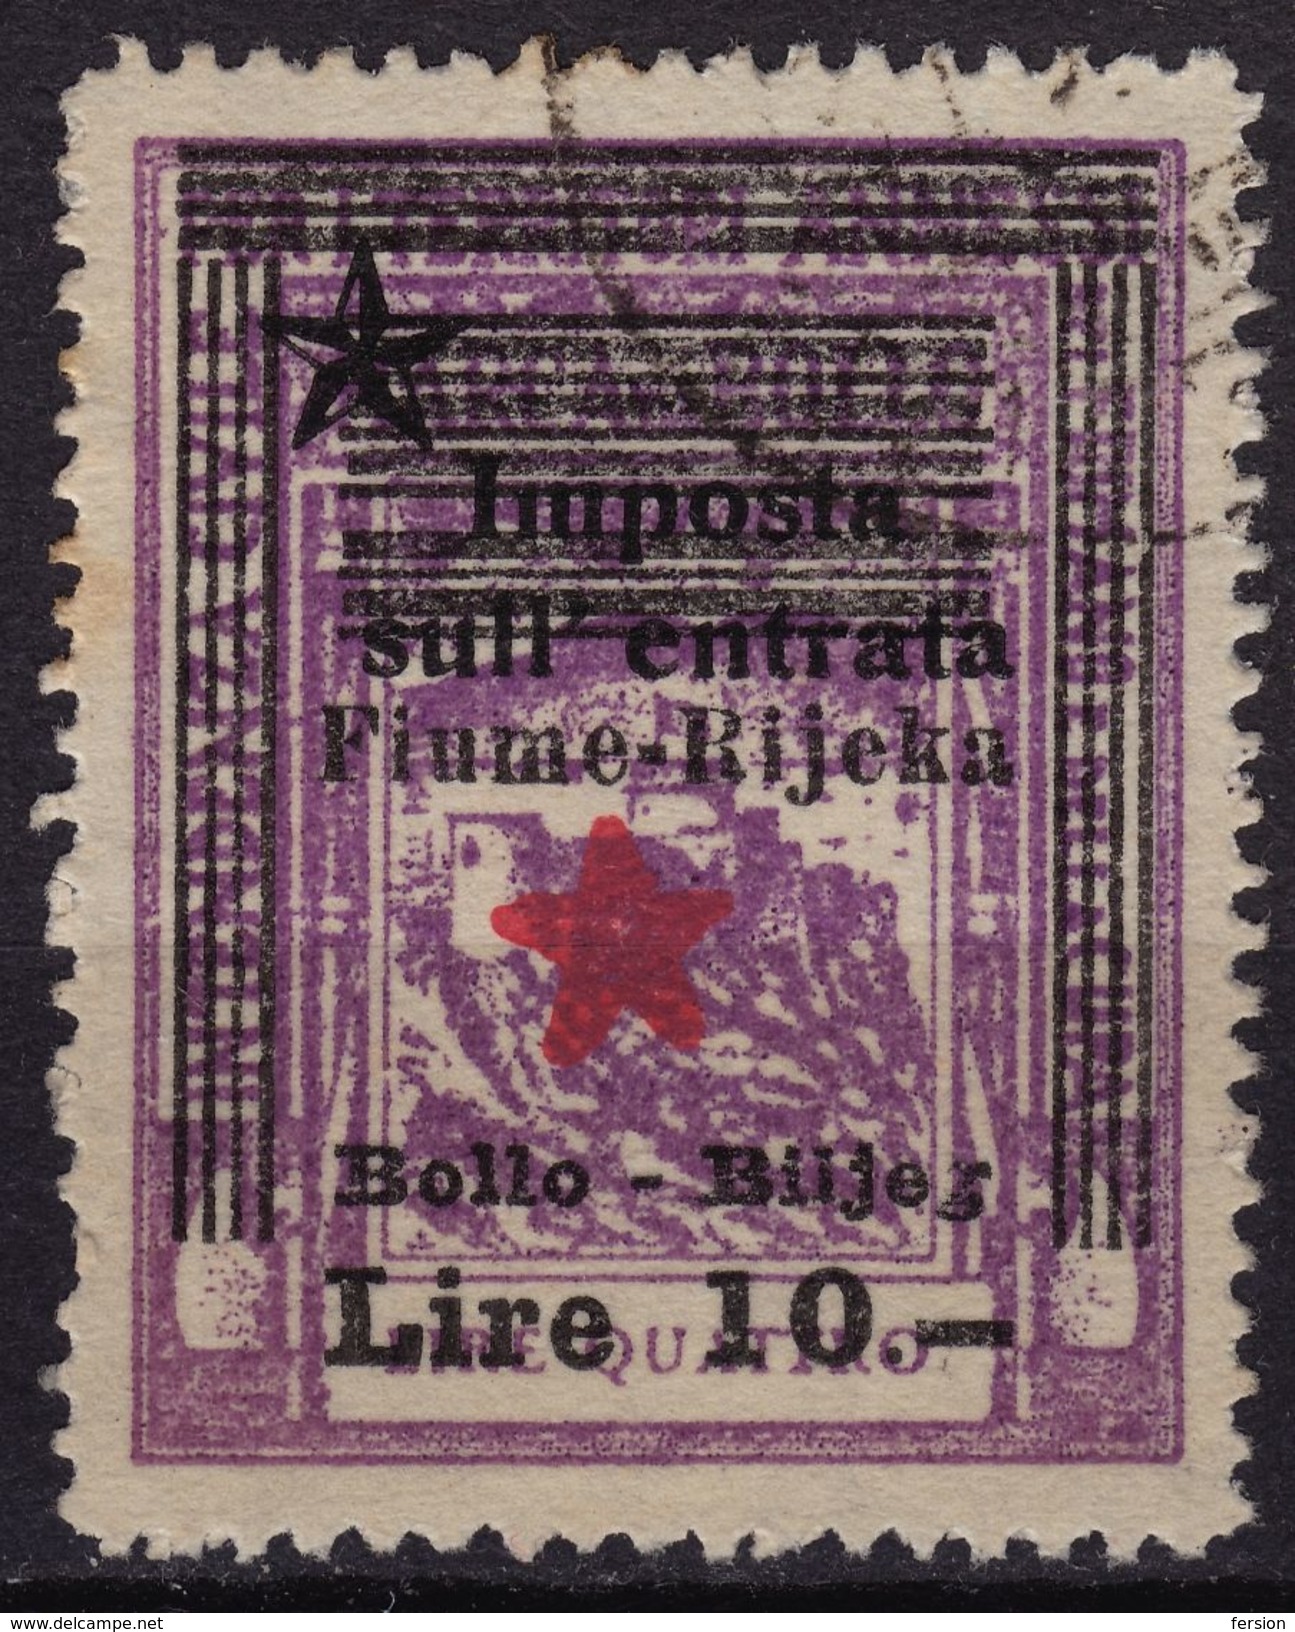 1945 - Istria Istra / Rijeka Fiume CROATIA - Yugoslavia Italy Occupation - Revenue Tax Stamp - Overprint - Occ. Yougoslave: Istria